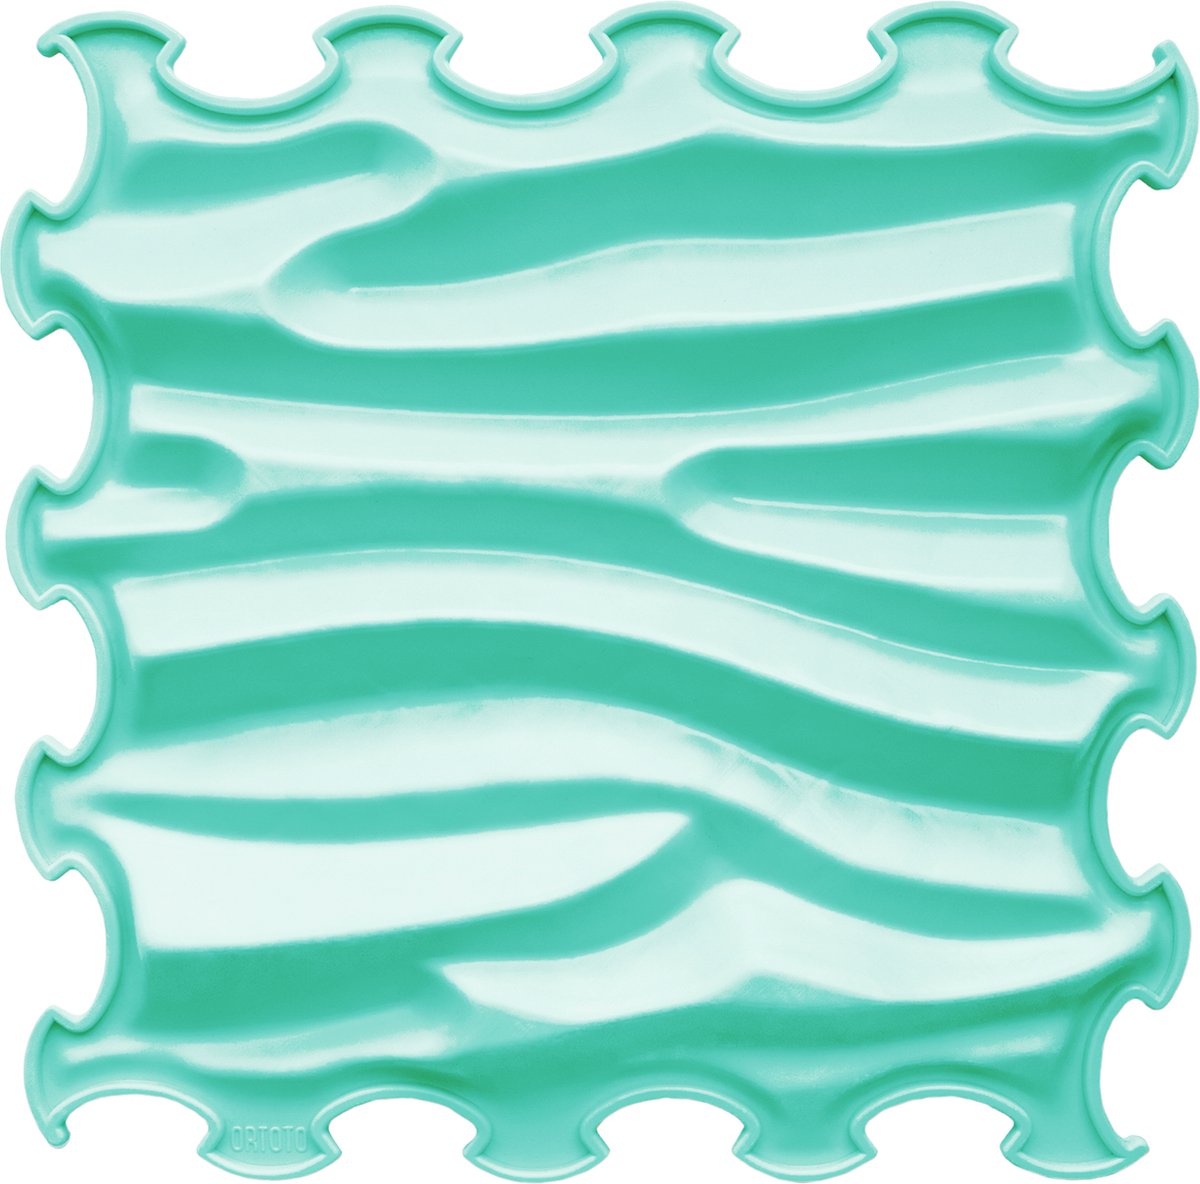 Ortoto sensorische mat Sandy Waves Sea Turquoise